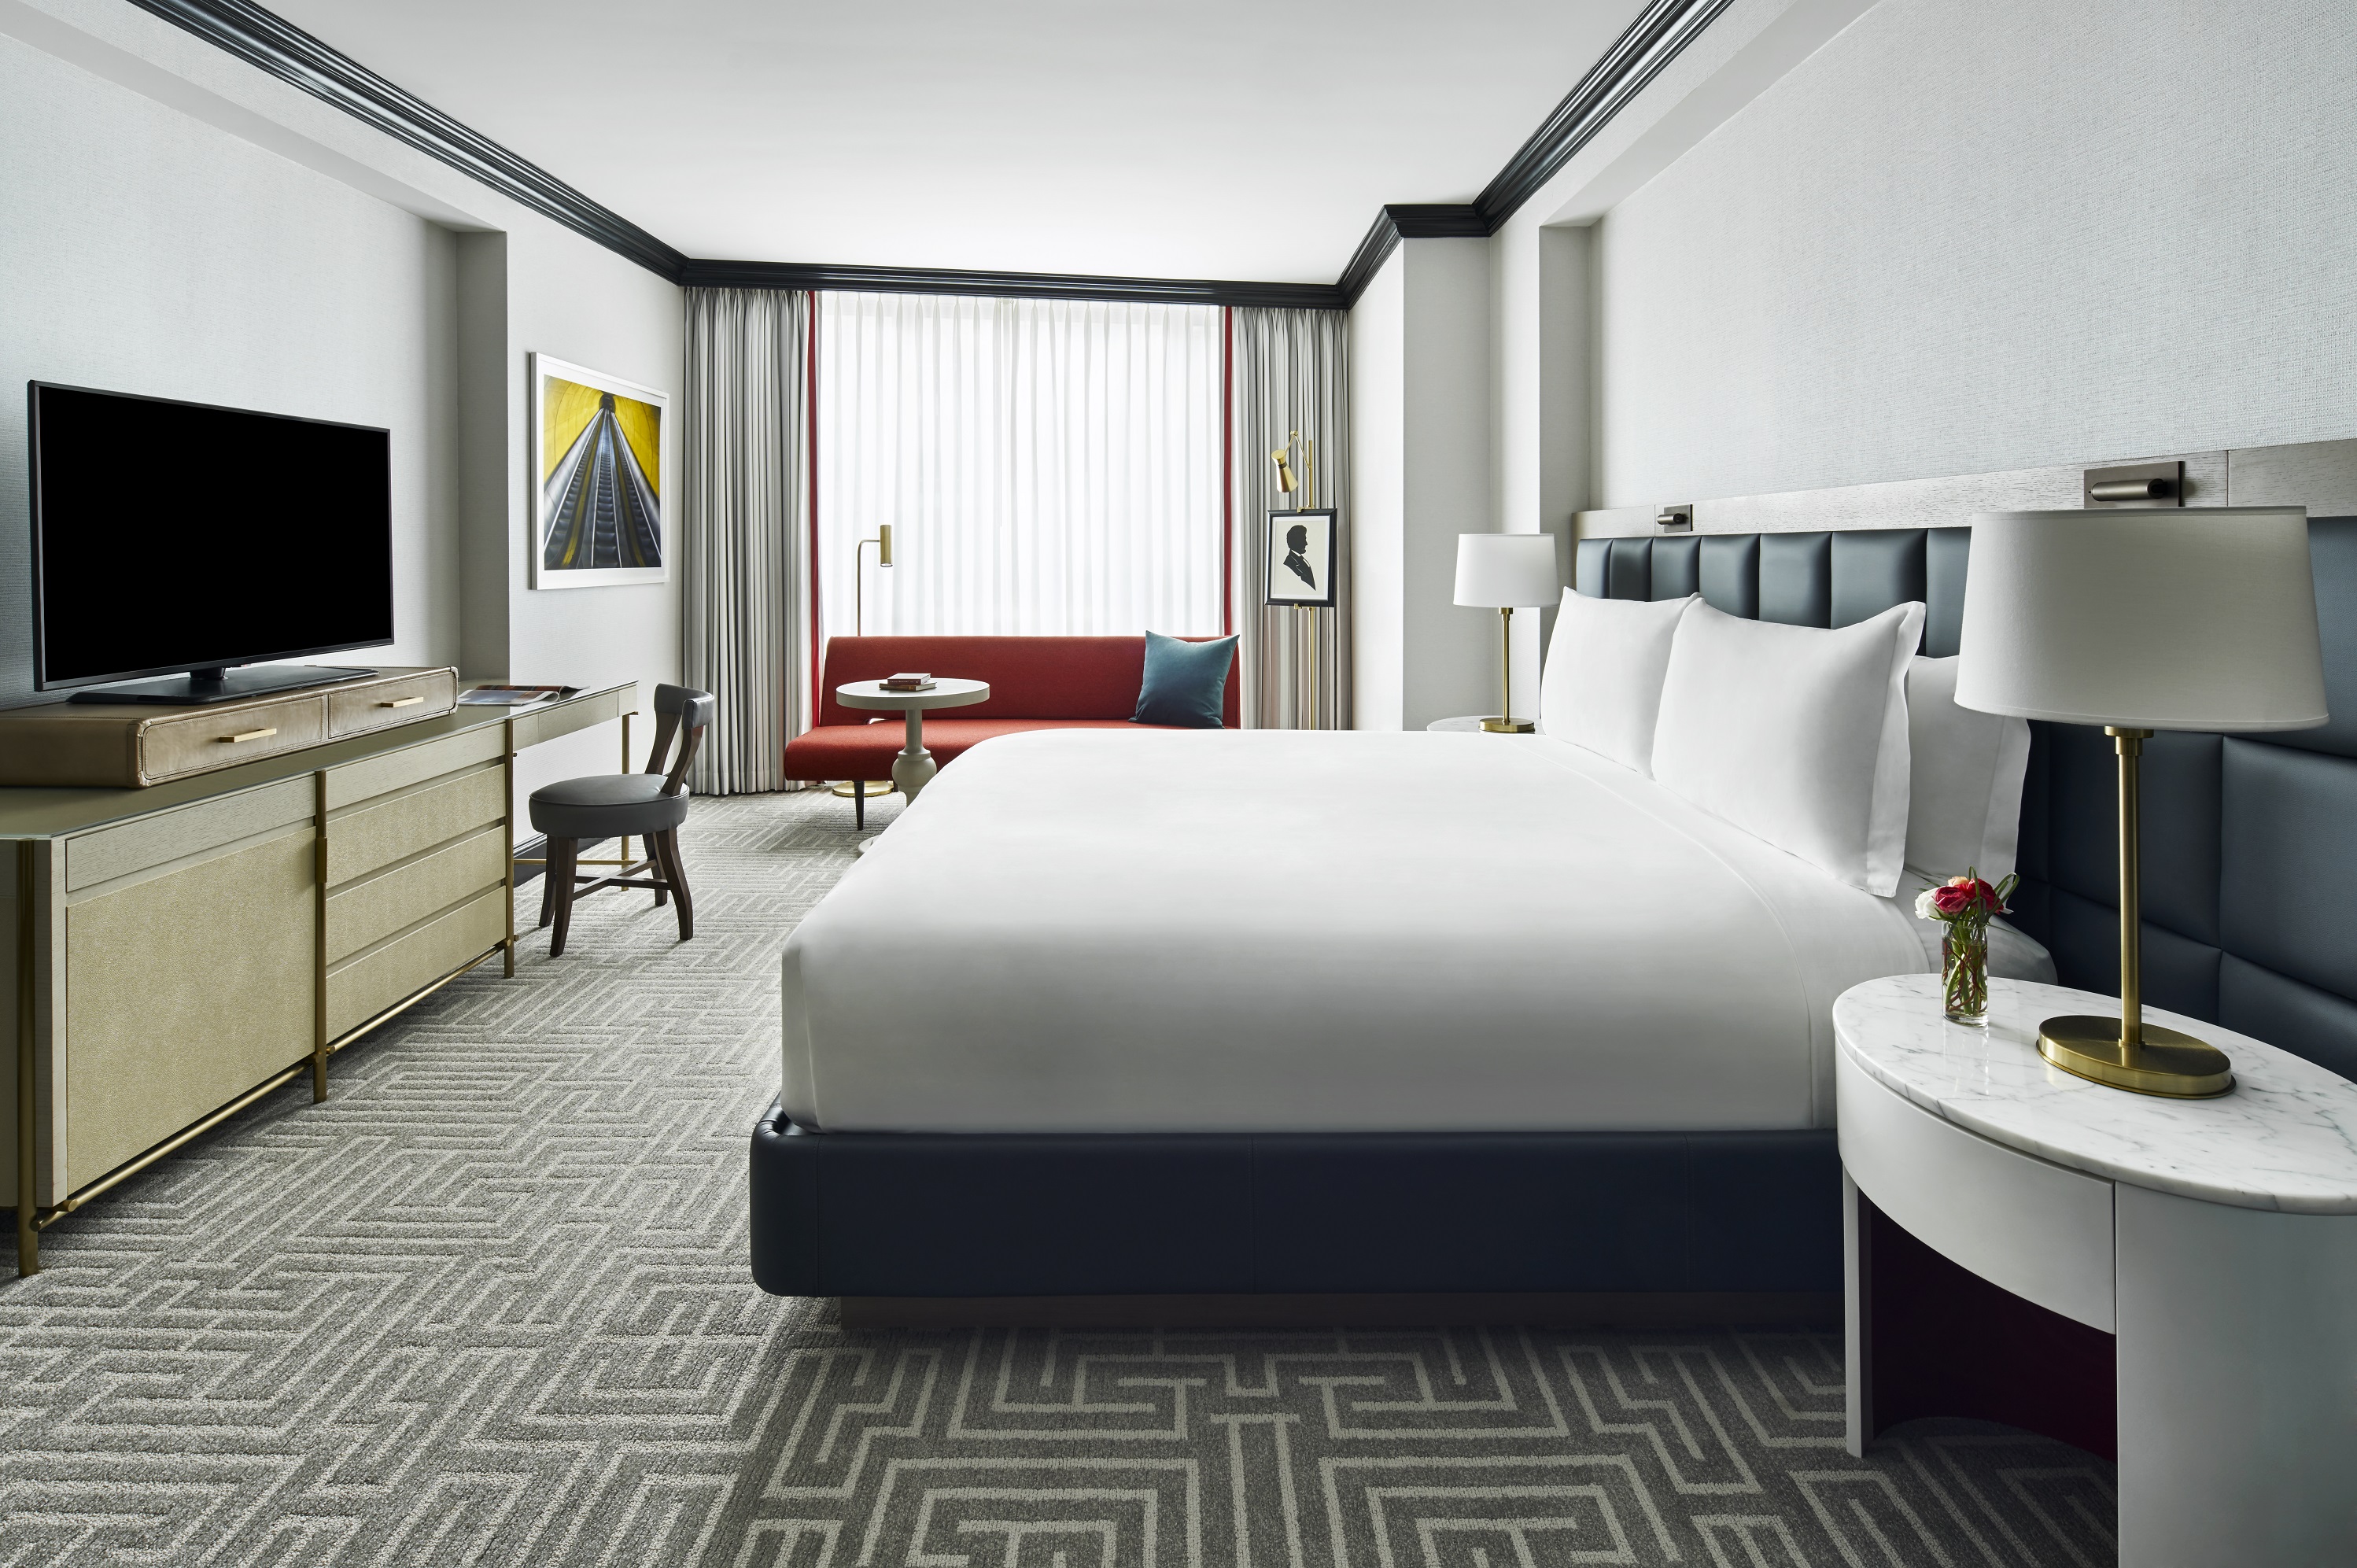 Newly designed accommodations at The Ritz-Carlton, Washington, D.C.